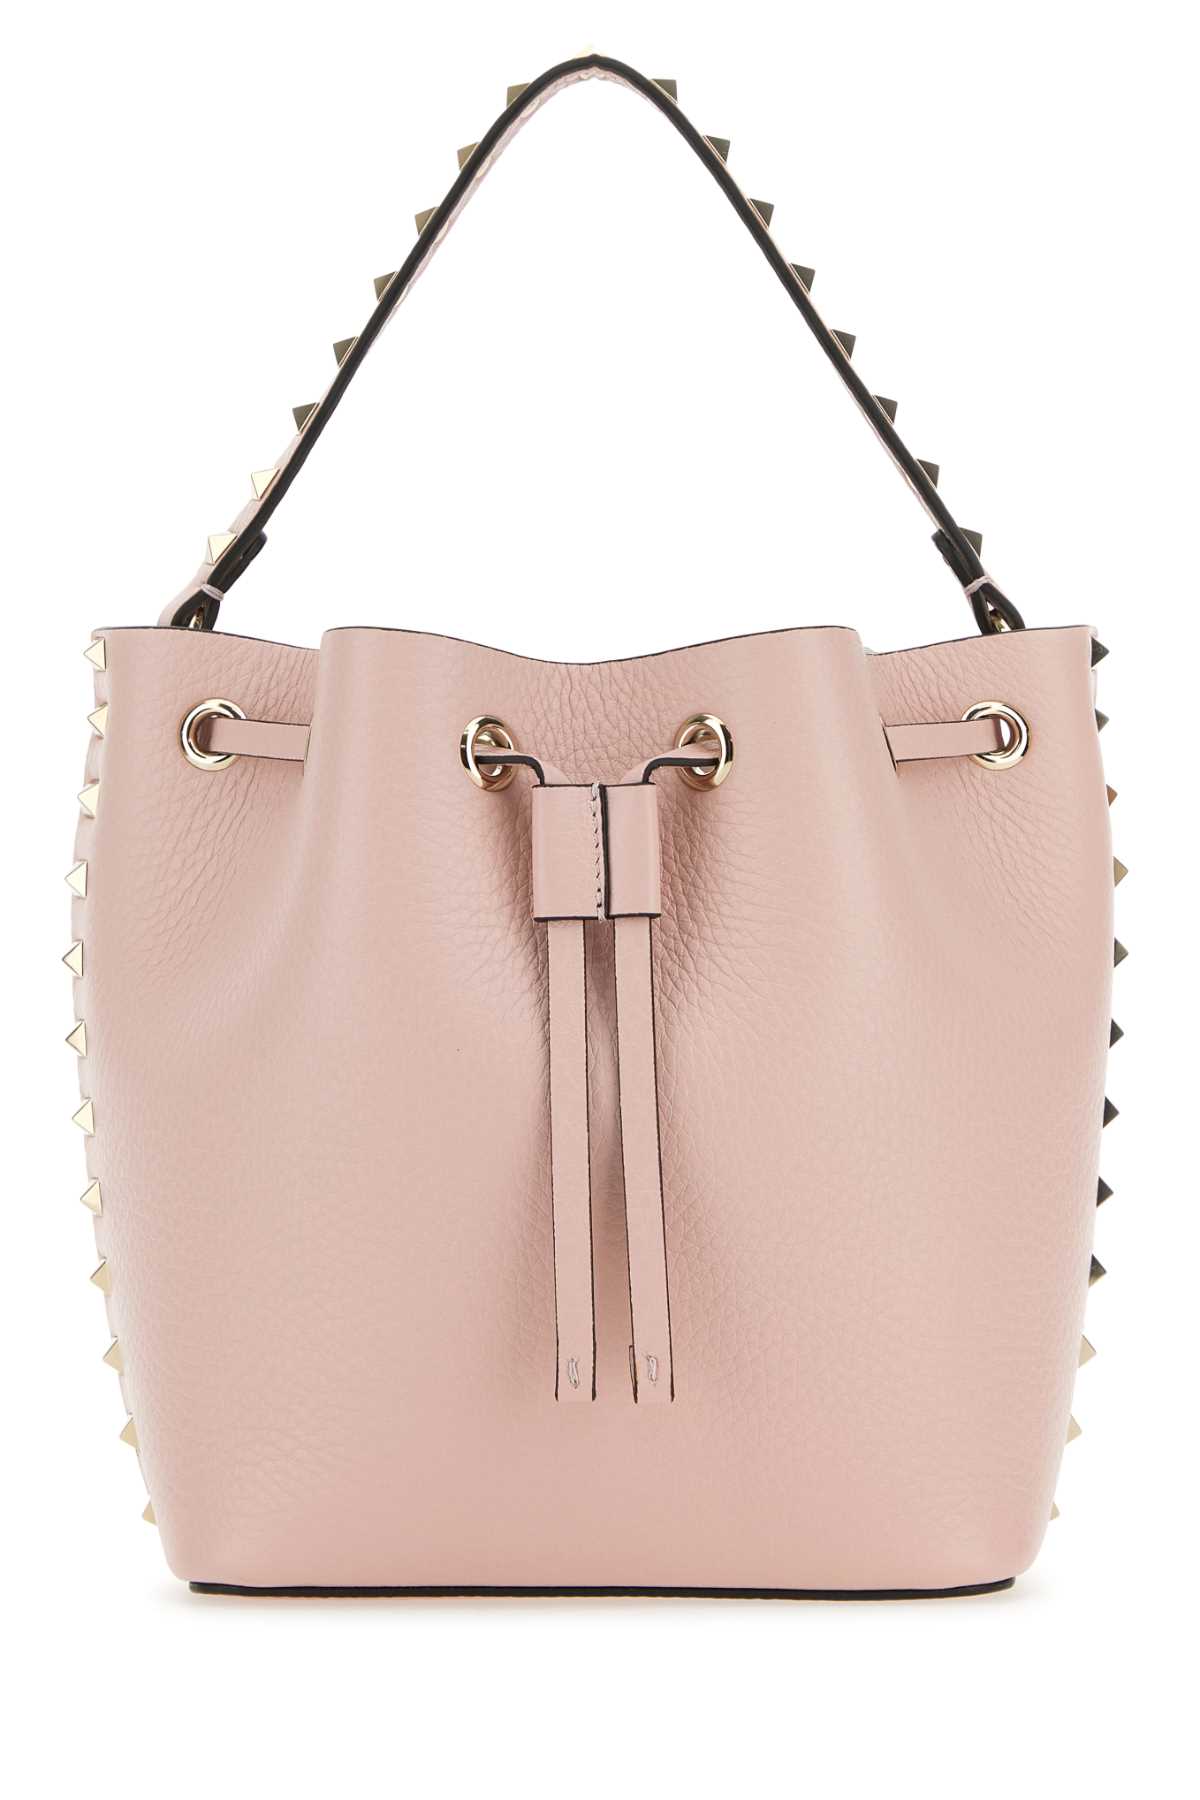 Valentino Garavani Light Pink Leather Rockstud Bucket Bag